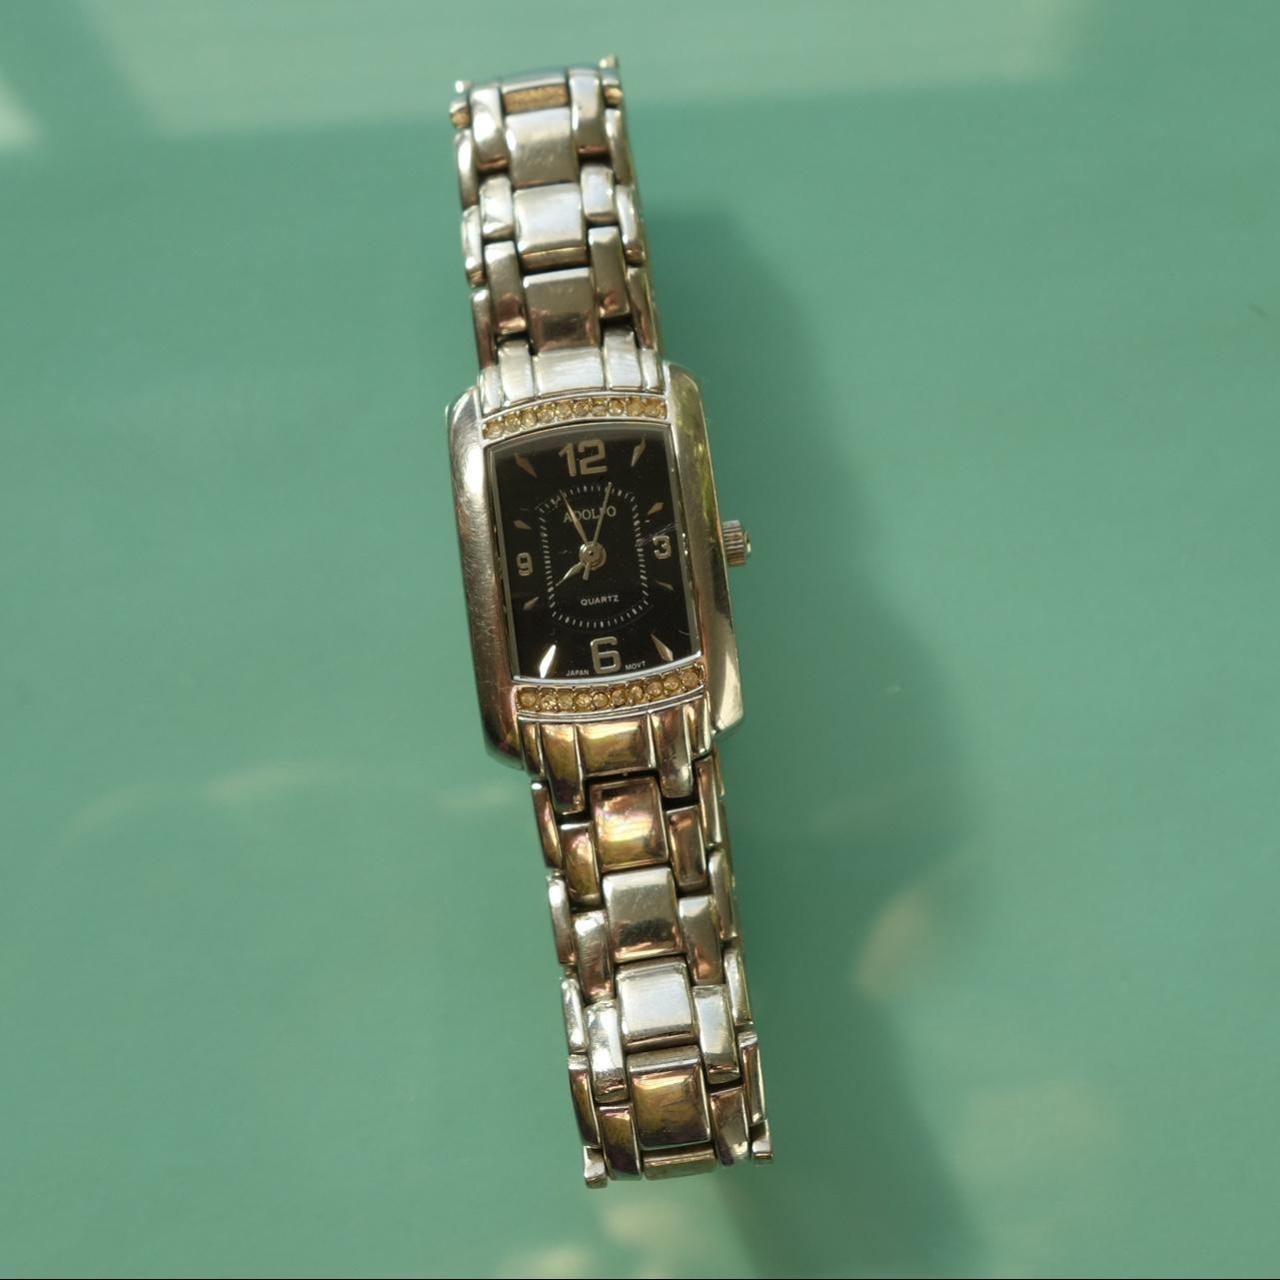 Adolfo german gold tone watch vintage | eBay